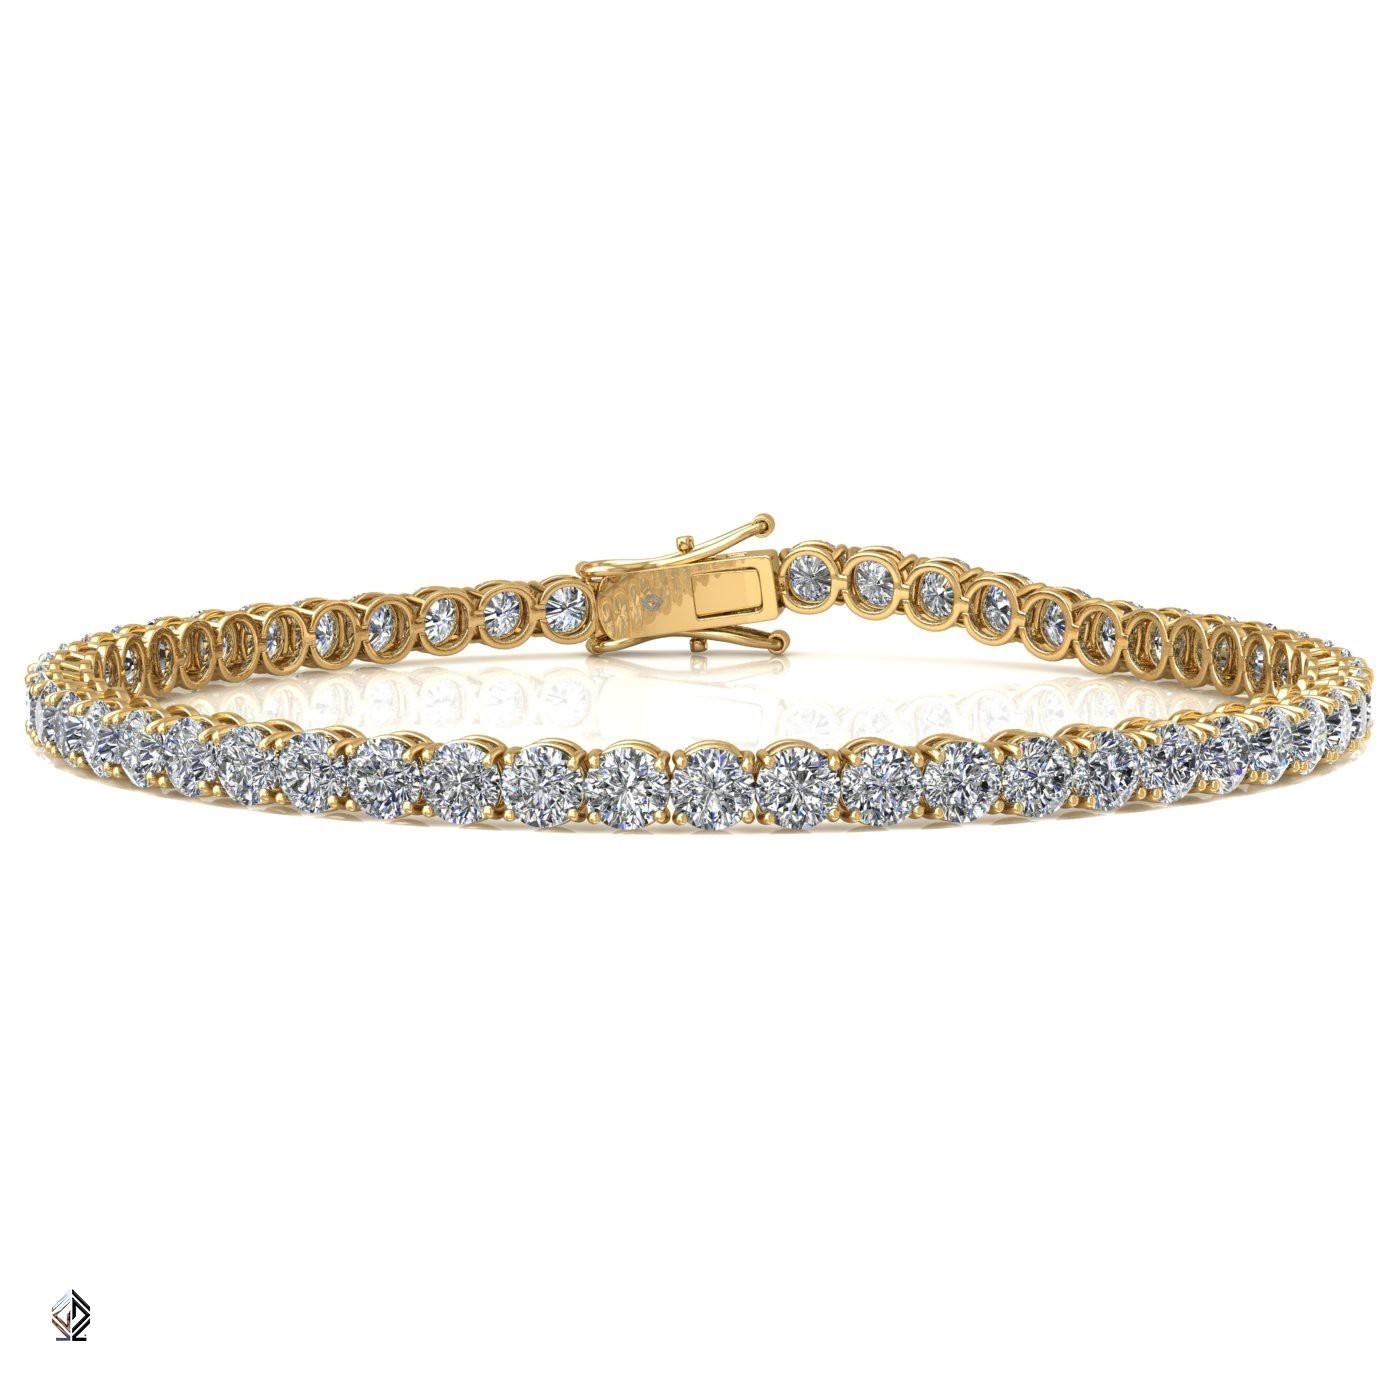 18k yellow gold 2.8mm 4 prong round shape diamond tennis bracelet in round setting